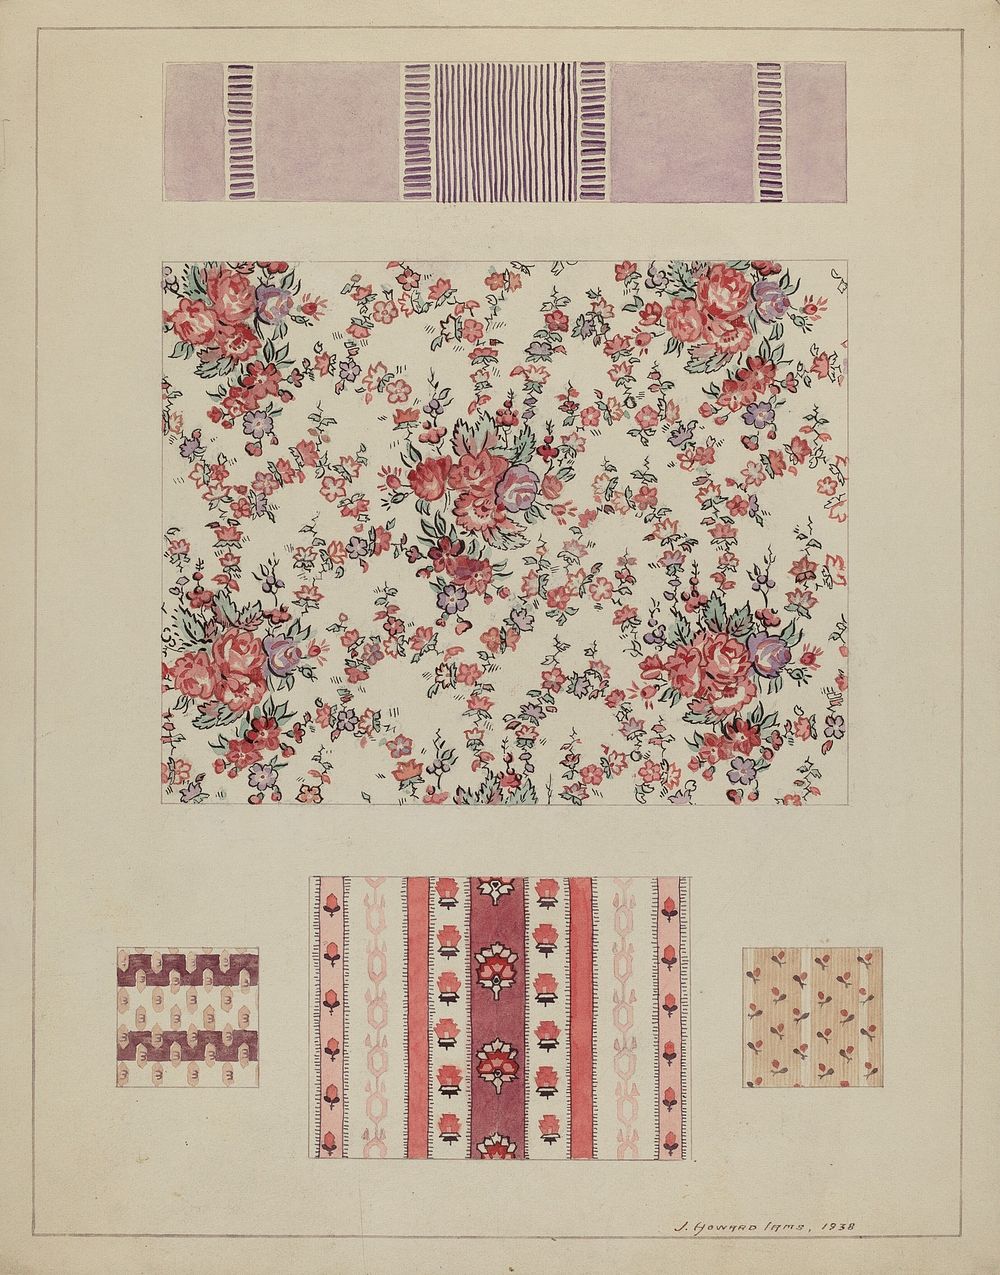 Printed Cotton (c. 1938) by J. Howard Iams.  